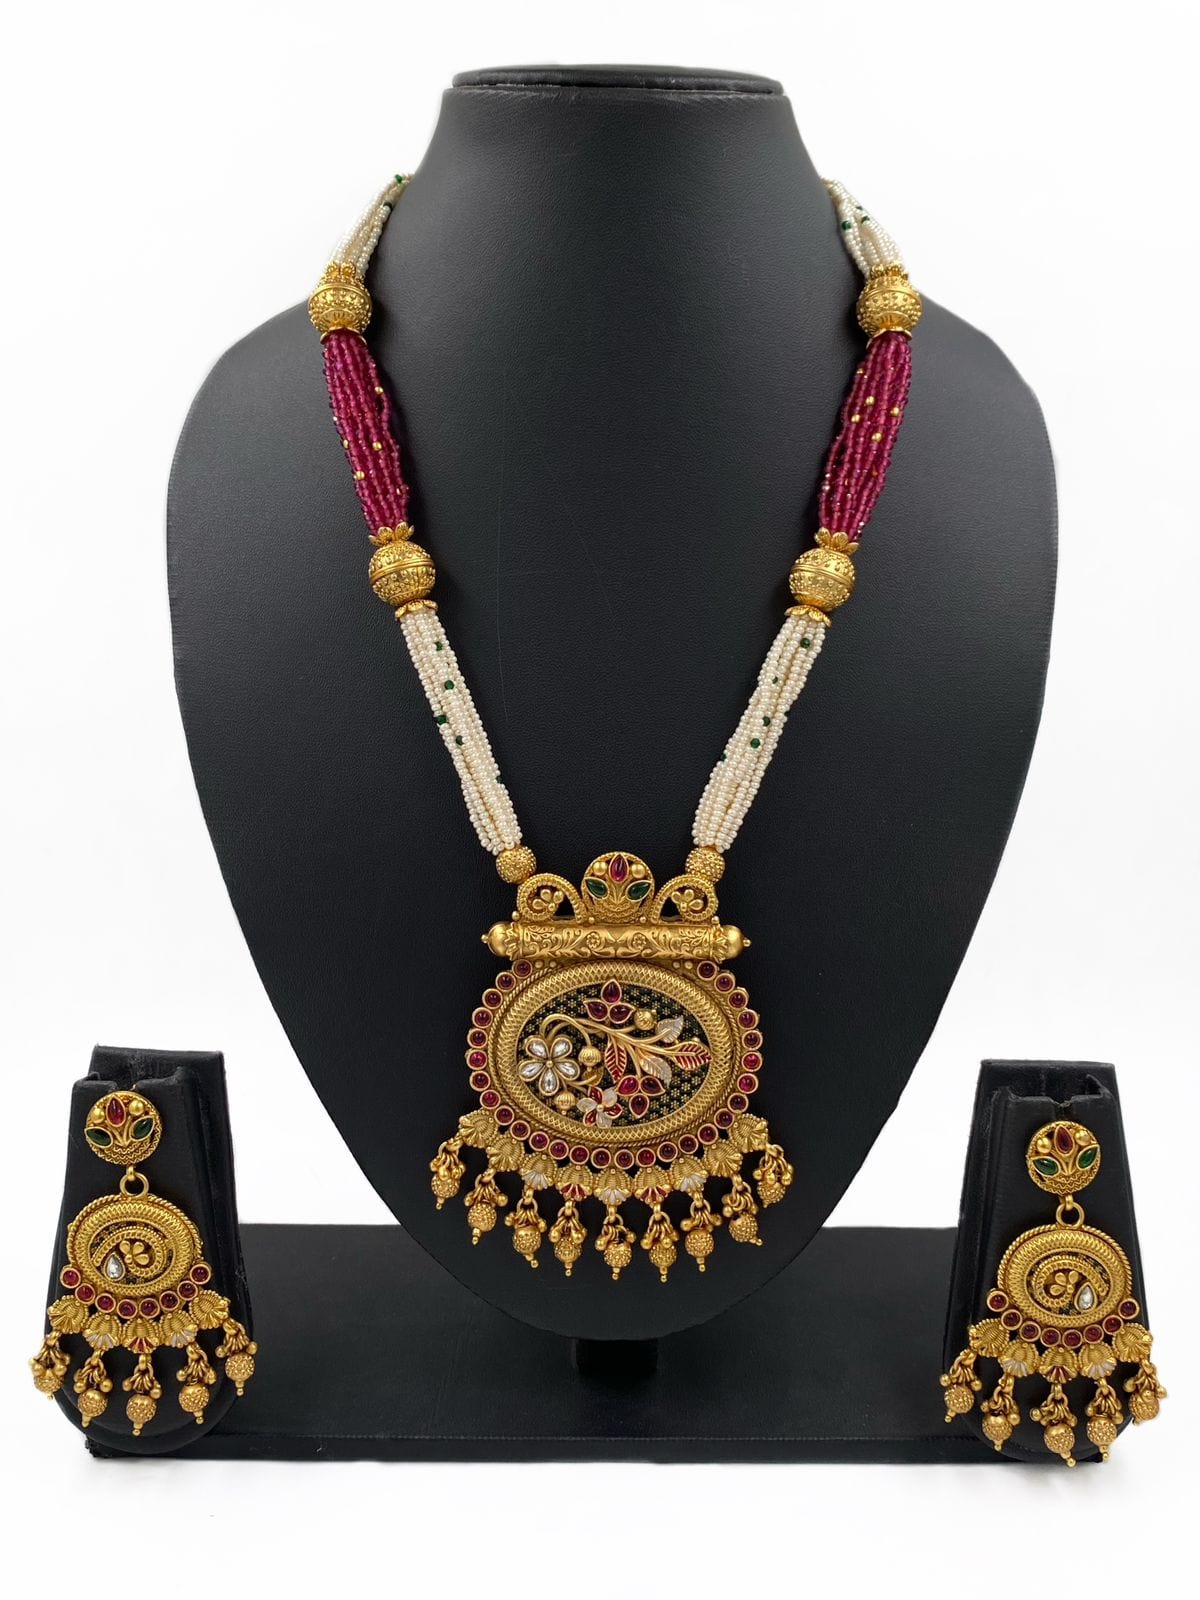 Designer Antique Golden Pendant Necklace Set With Pearls By Gehna Shop Antique Golden Necklace Sets